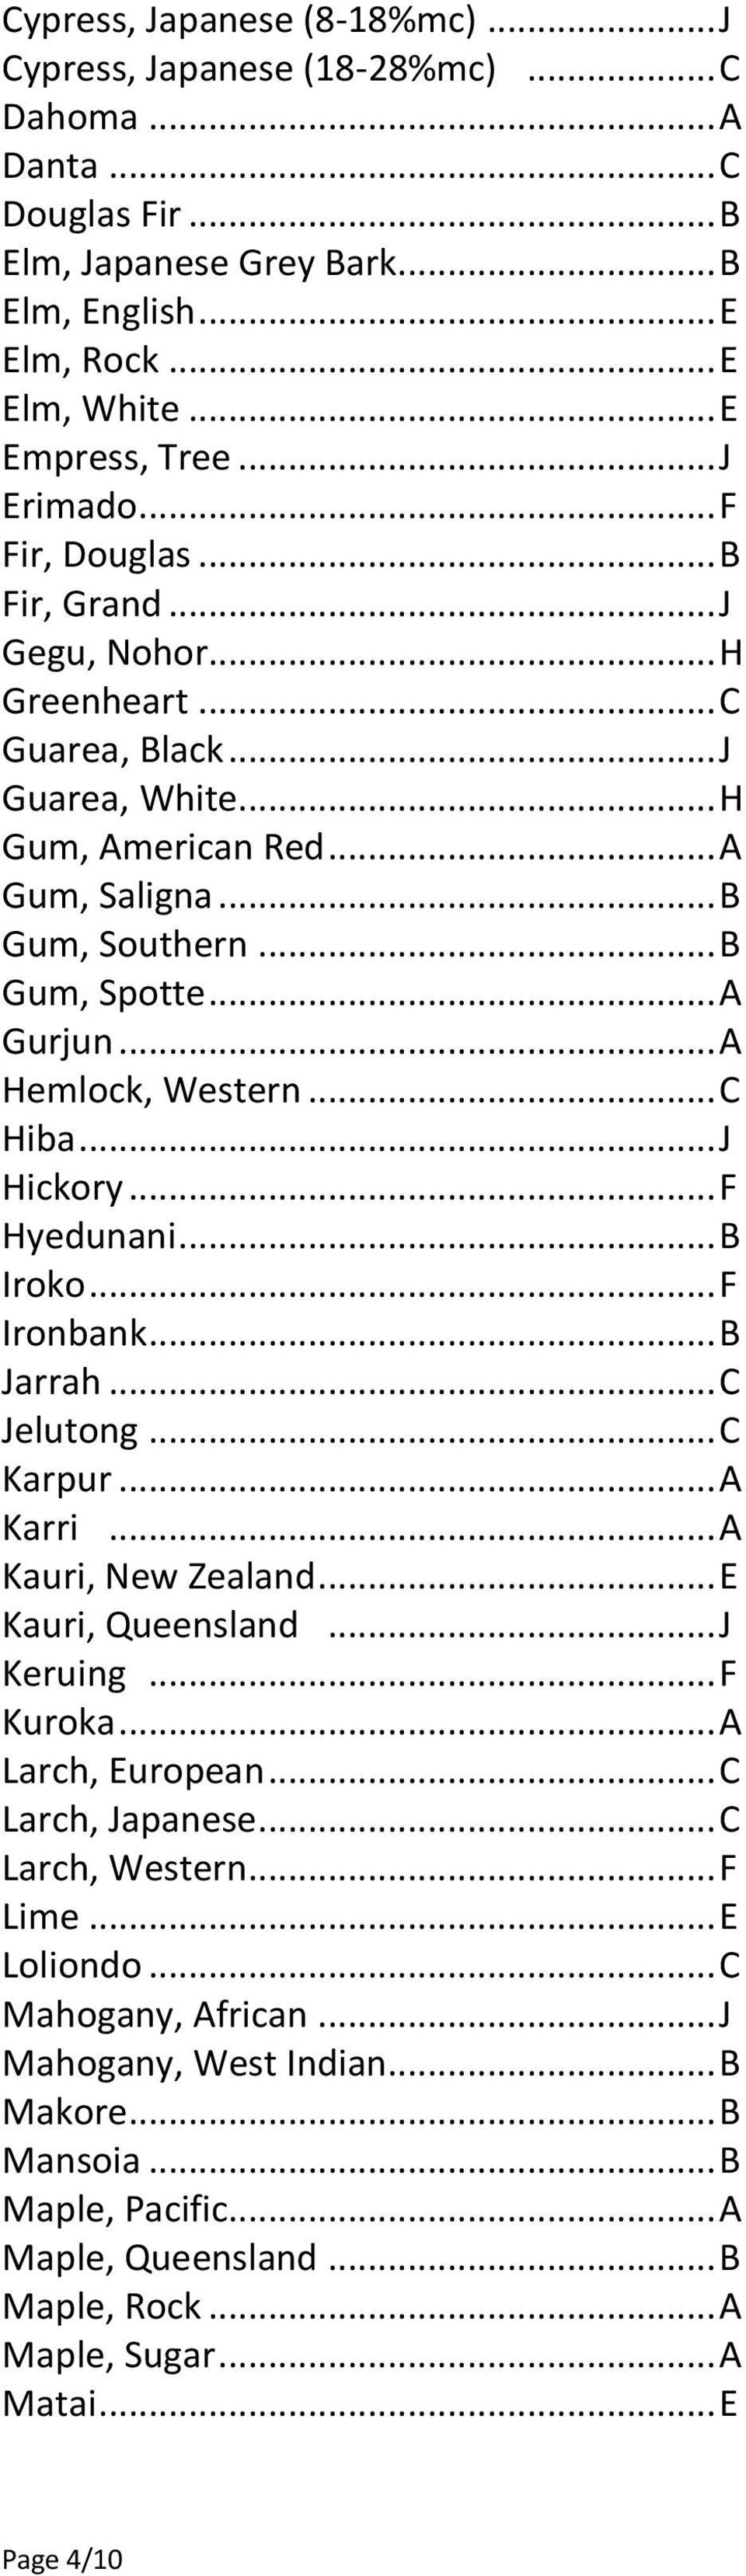 .. A Gurjun... A Hemlock, Western... C Hiba... J Hickory... F Hyedunani... B Iroko... F Ironbank... B Jarrah... C Jelutong... C Karpur... A Karri... A Kauri, New Zealand... E Kauri, Queensland.